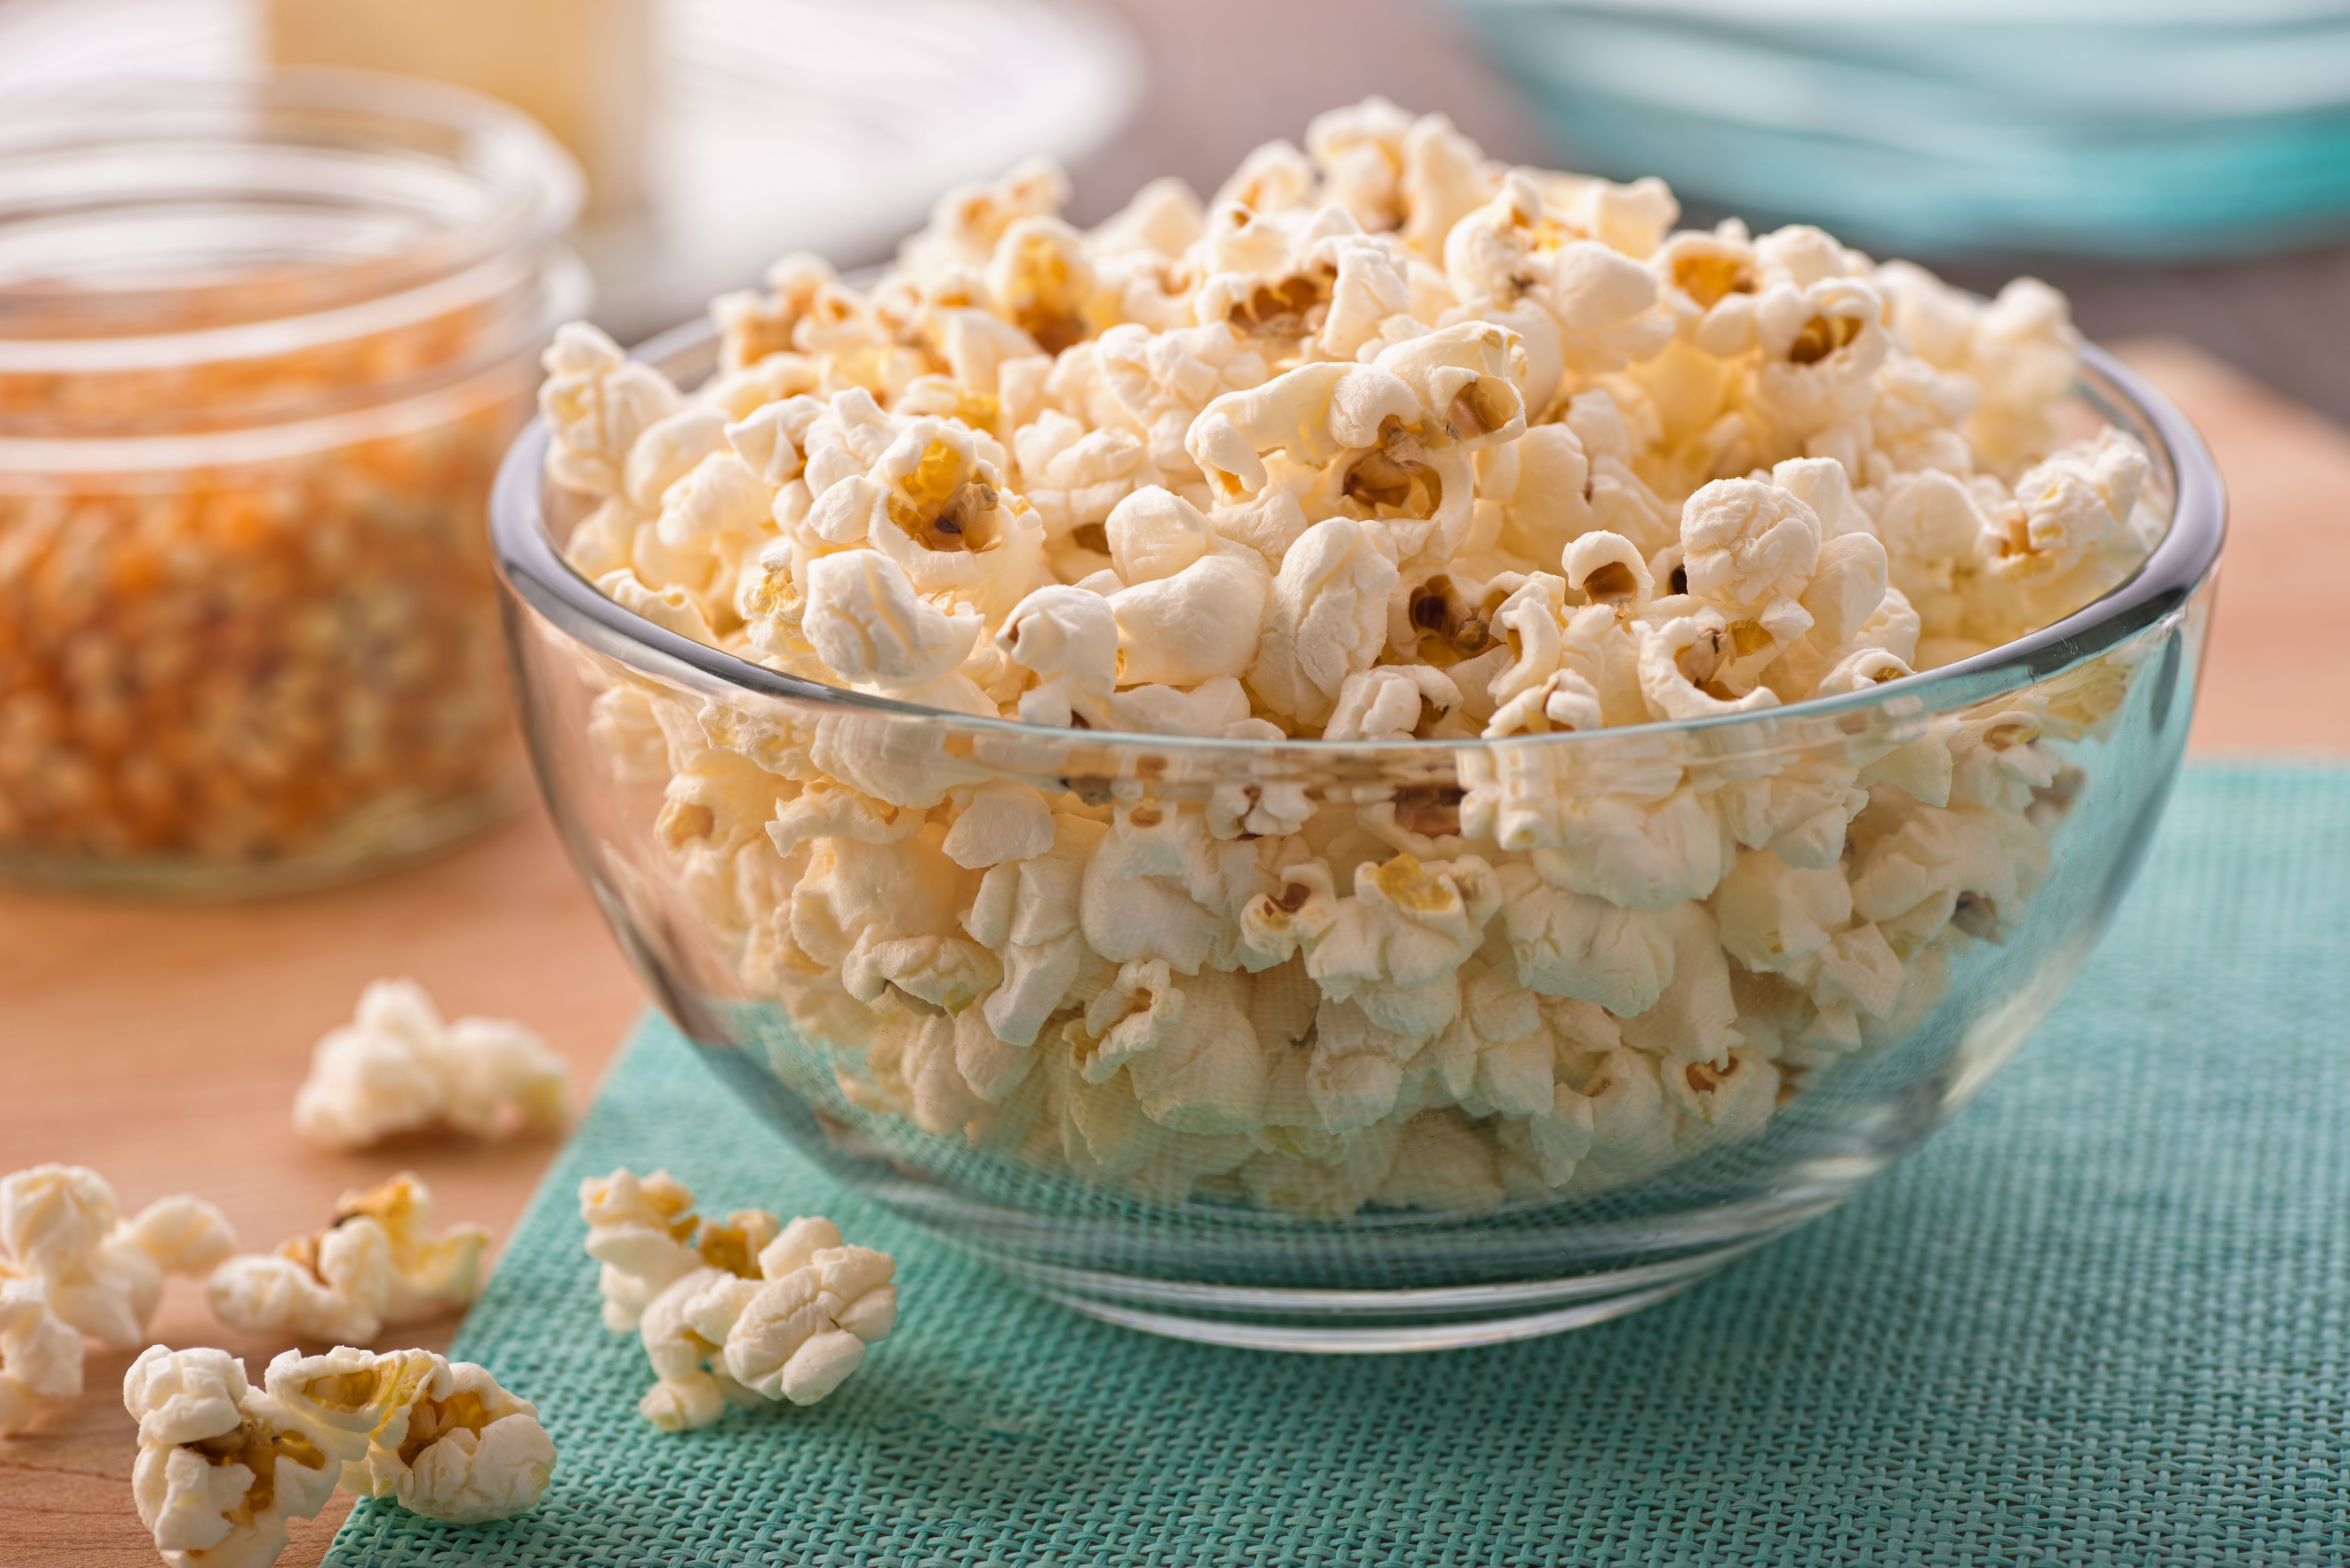 A bowl of freshly popped homemade popcorn